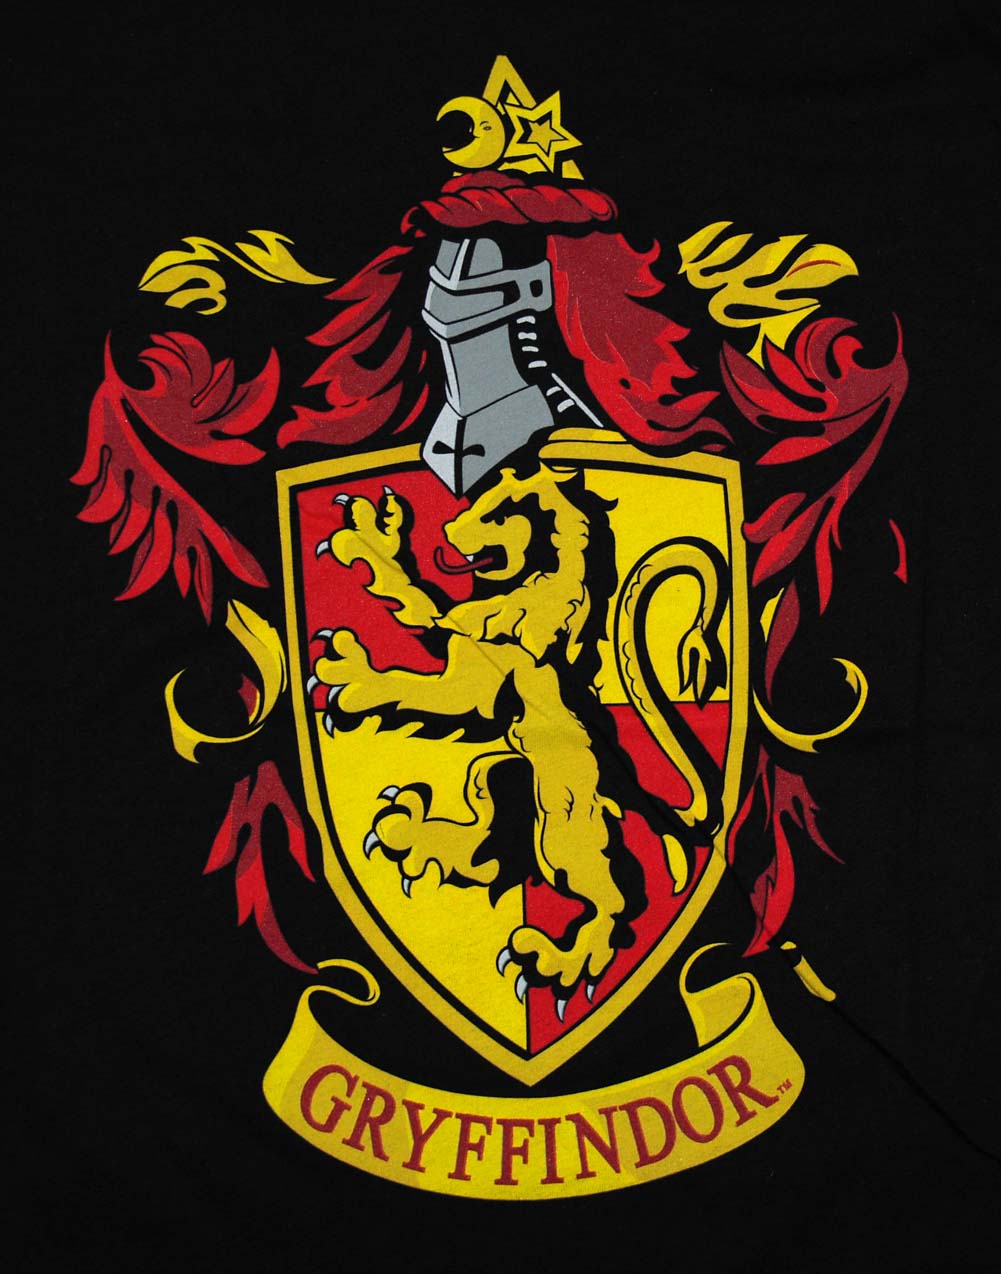 Ipad Gryffindor Wallpapers On Wallpaperdog